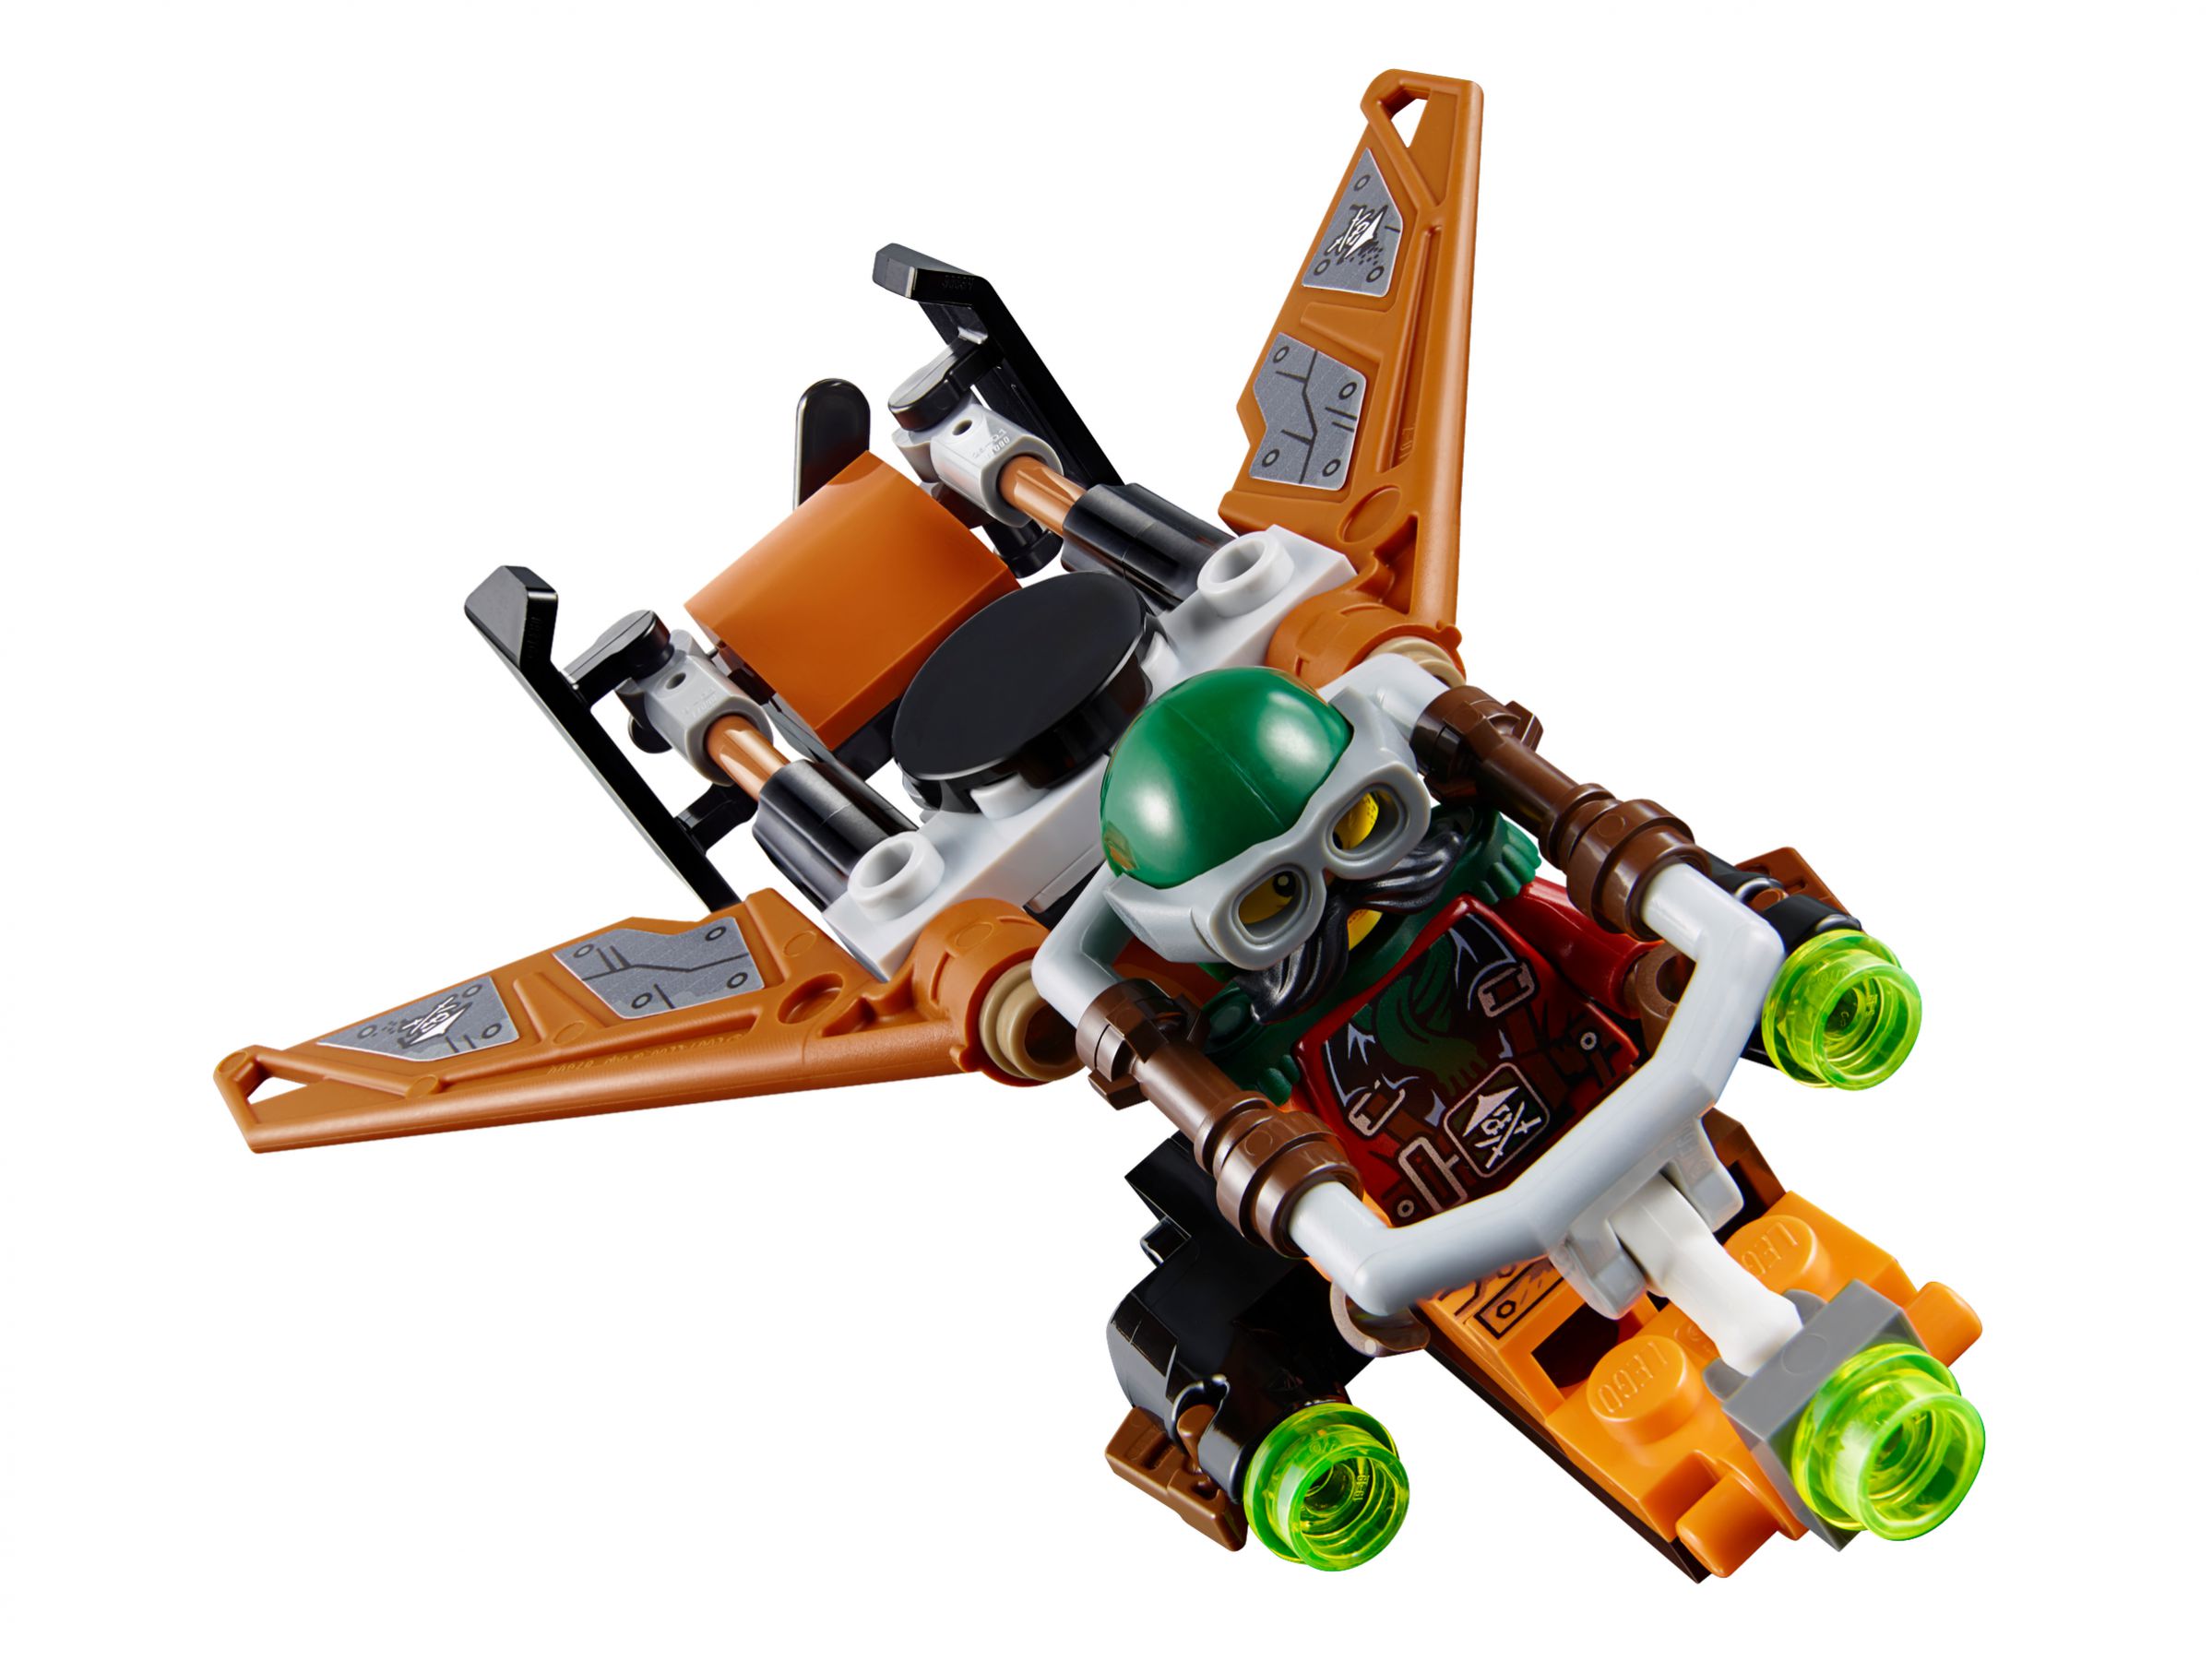 LEGO Ninjago 70605 Luftschiff des Unglücks LEGO_70605_alt8.jpg